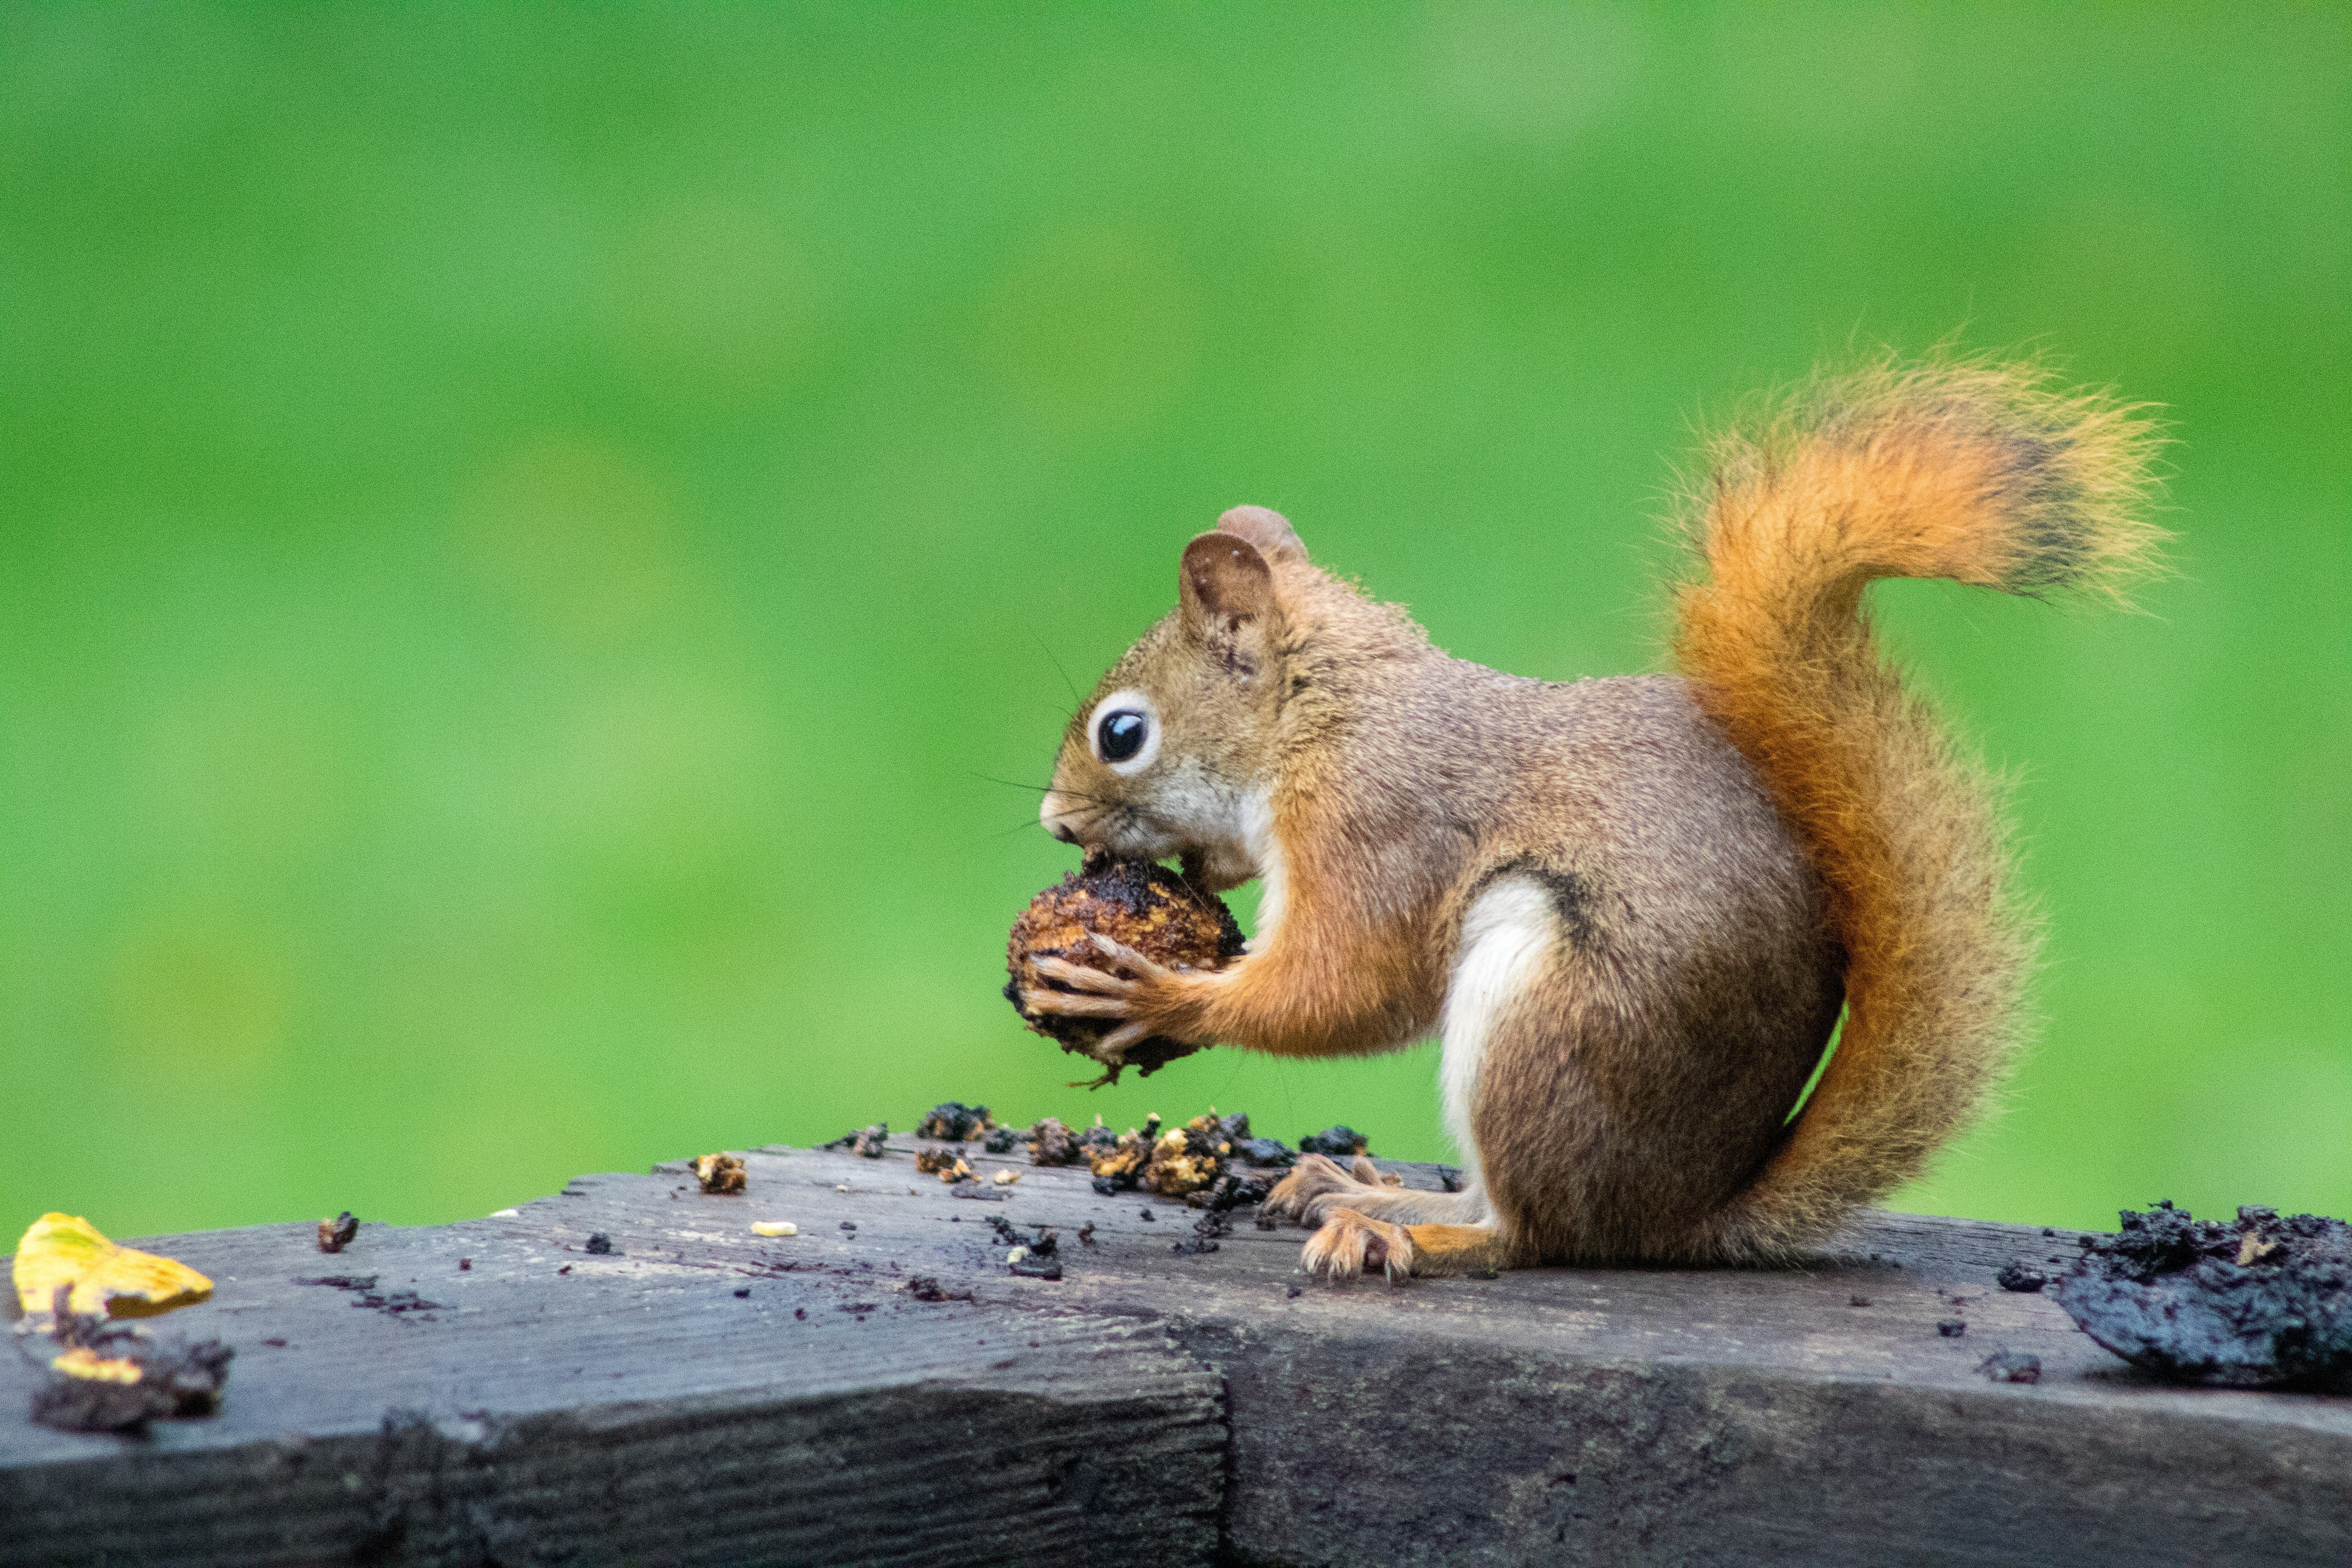 A squirrel sitting on a deck ledge eats an acorn.